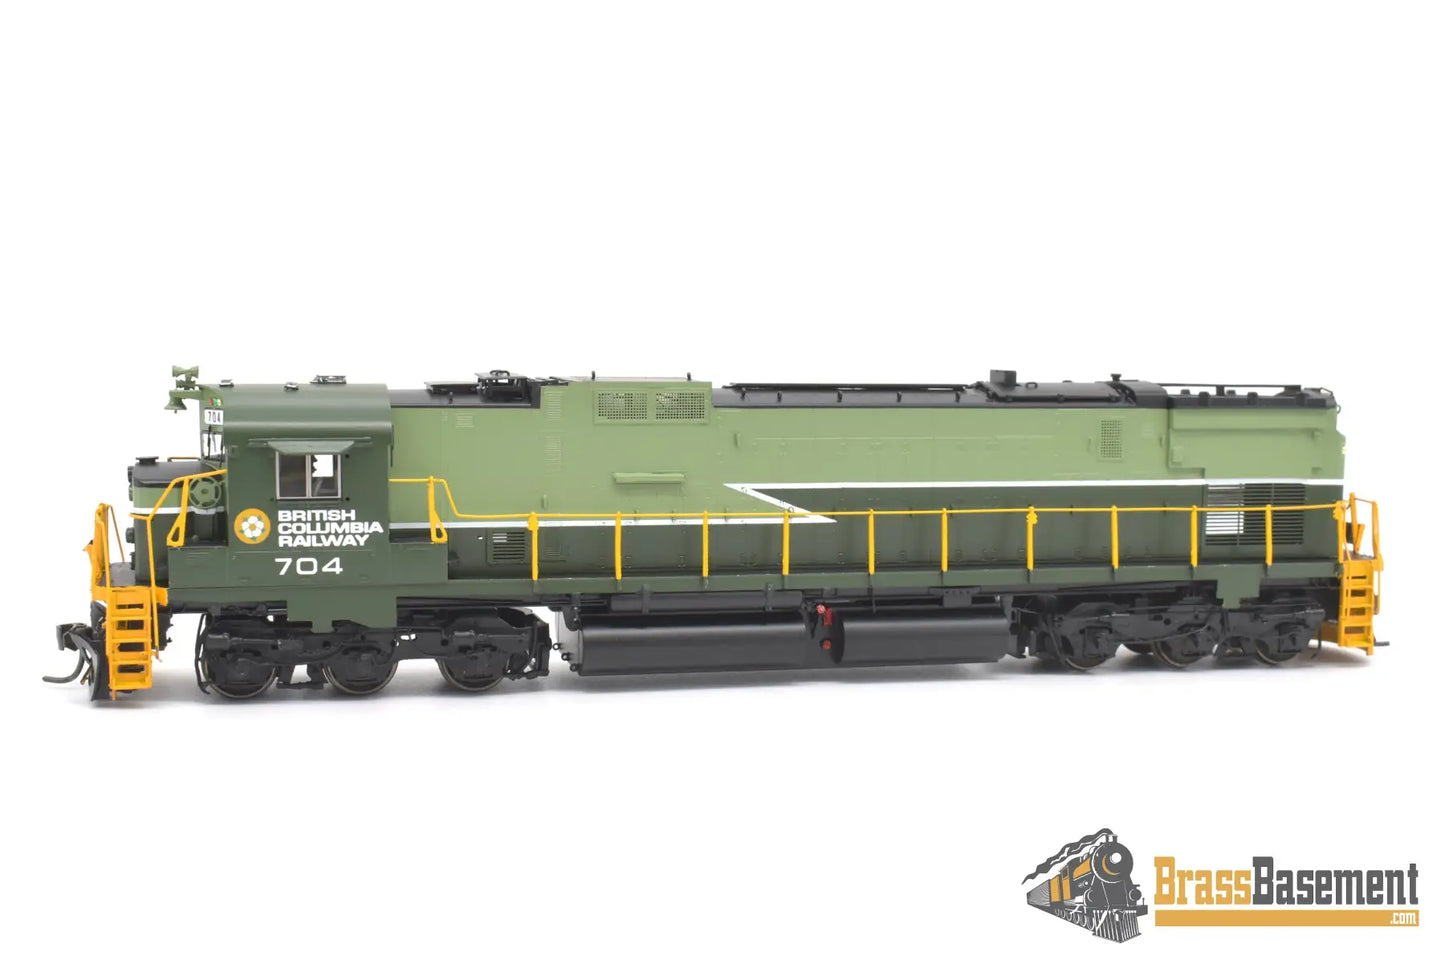 Ho Brass - Omi 6700.2 Bcr British Columbia Railway C6301 #704 F/P Two - Tone Green Diesel